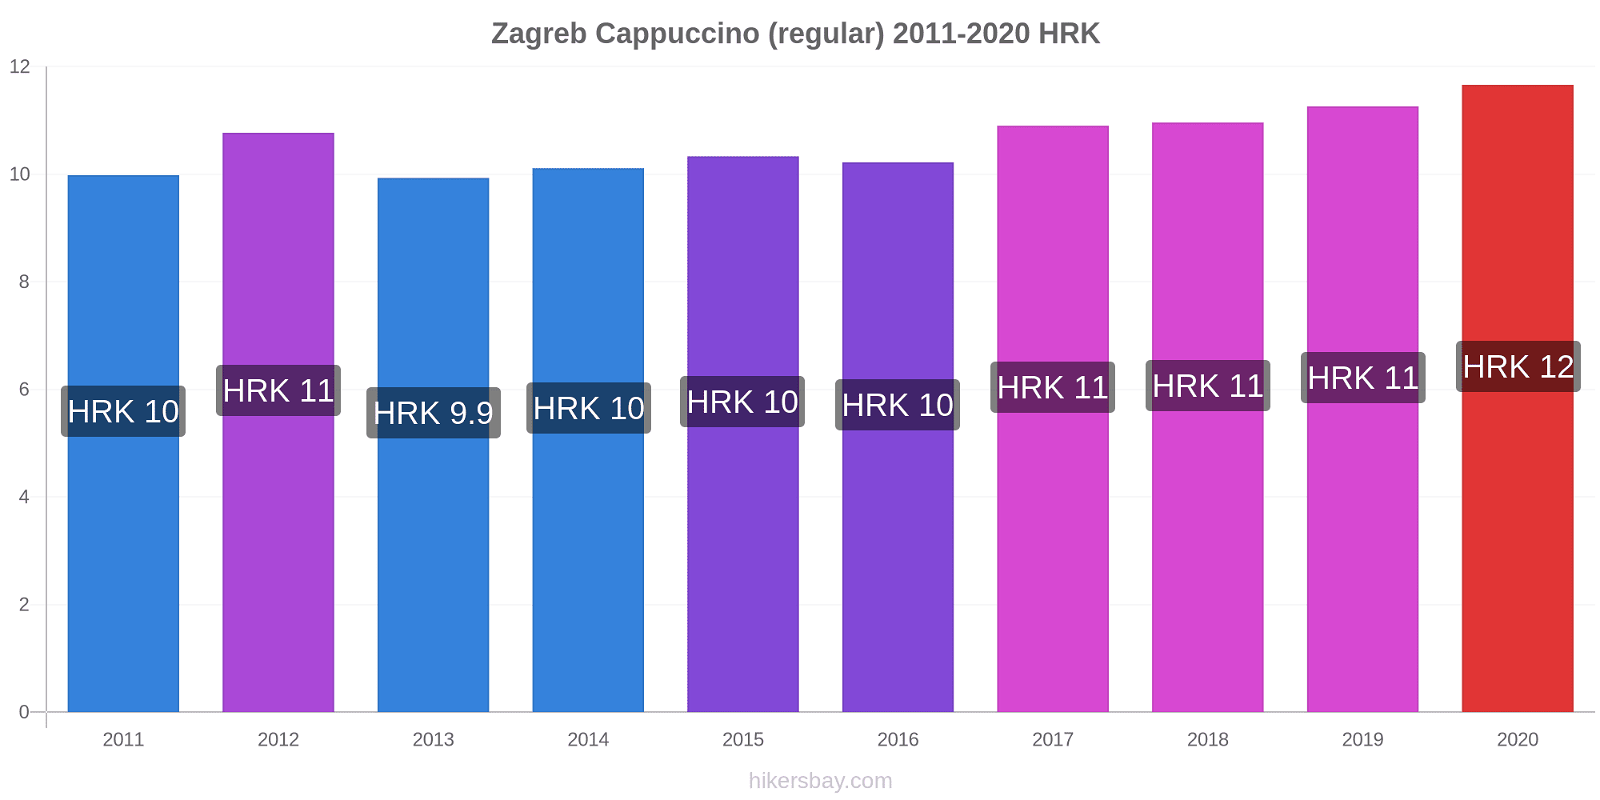 Zagreb price changes Cappuccino (regular) hikersbay.com